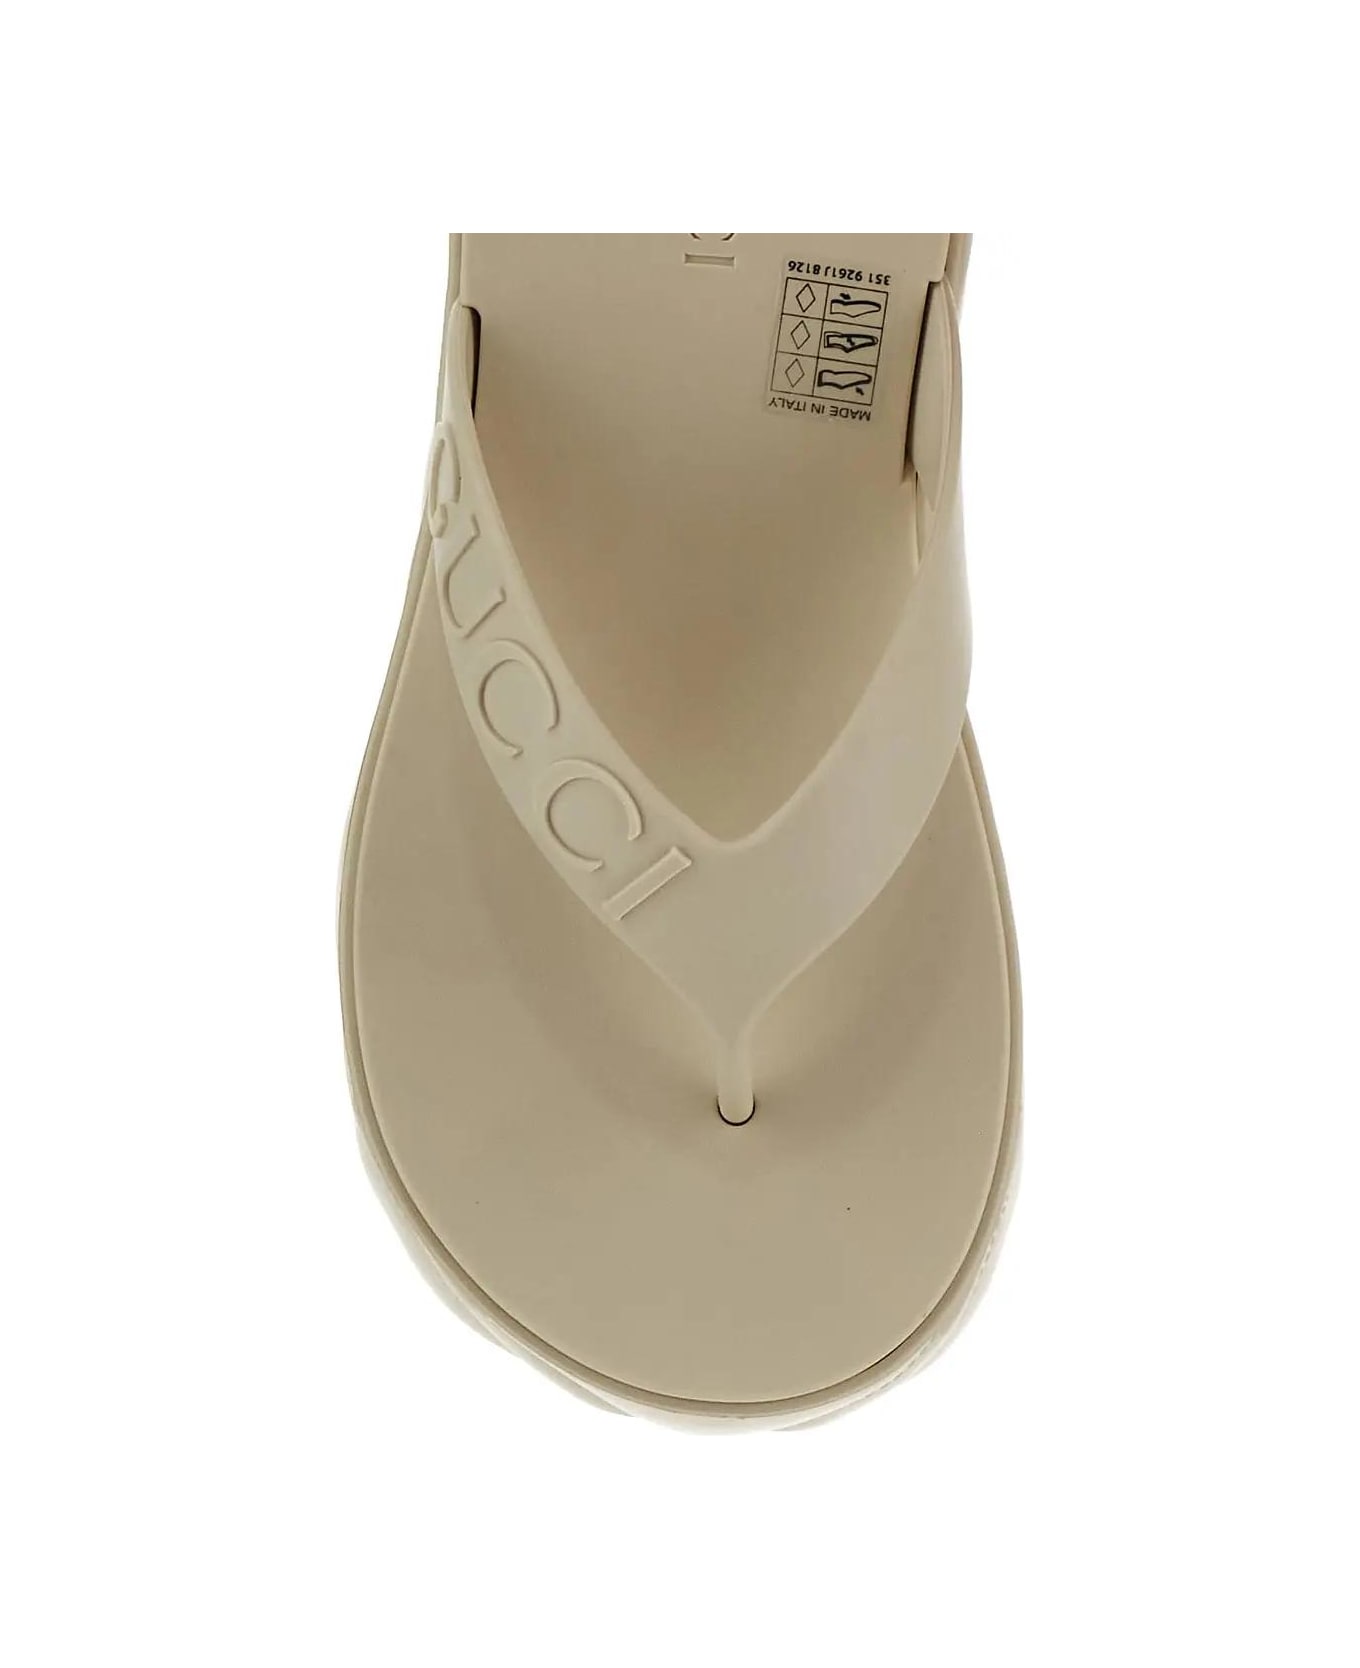 Gucci Thong Platform Sandals - White